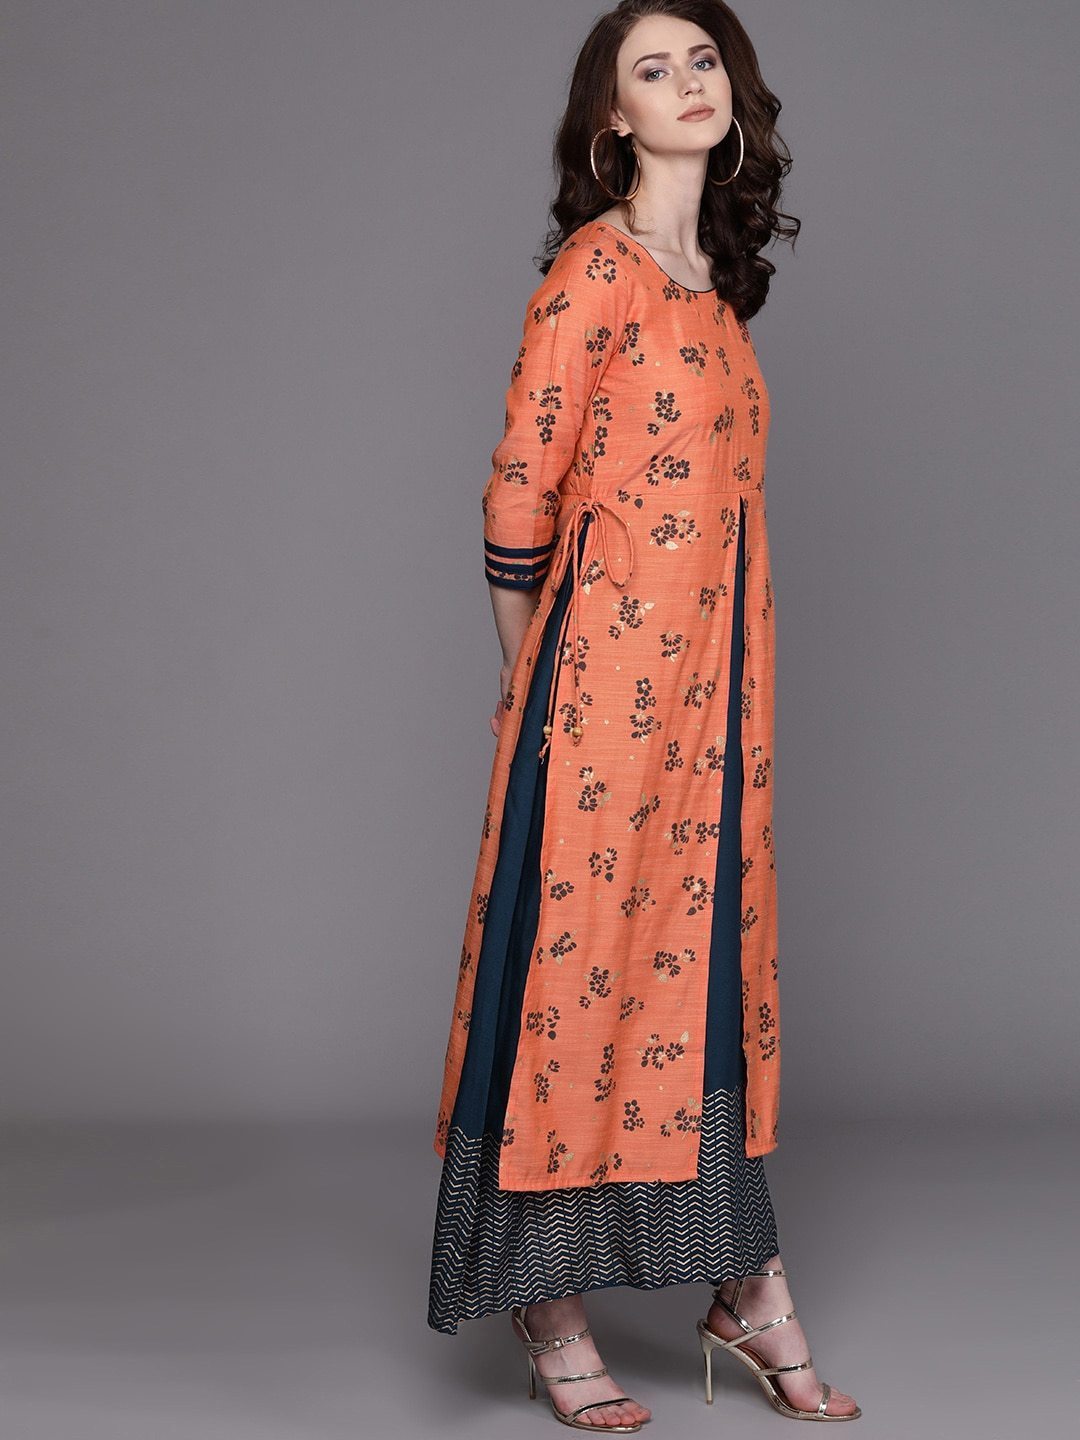 Women's  Orange & Teal Blue Floral Print Layered Maxi Dress - AKS